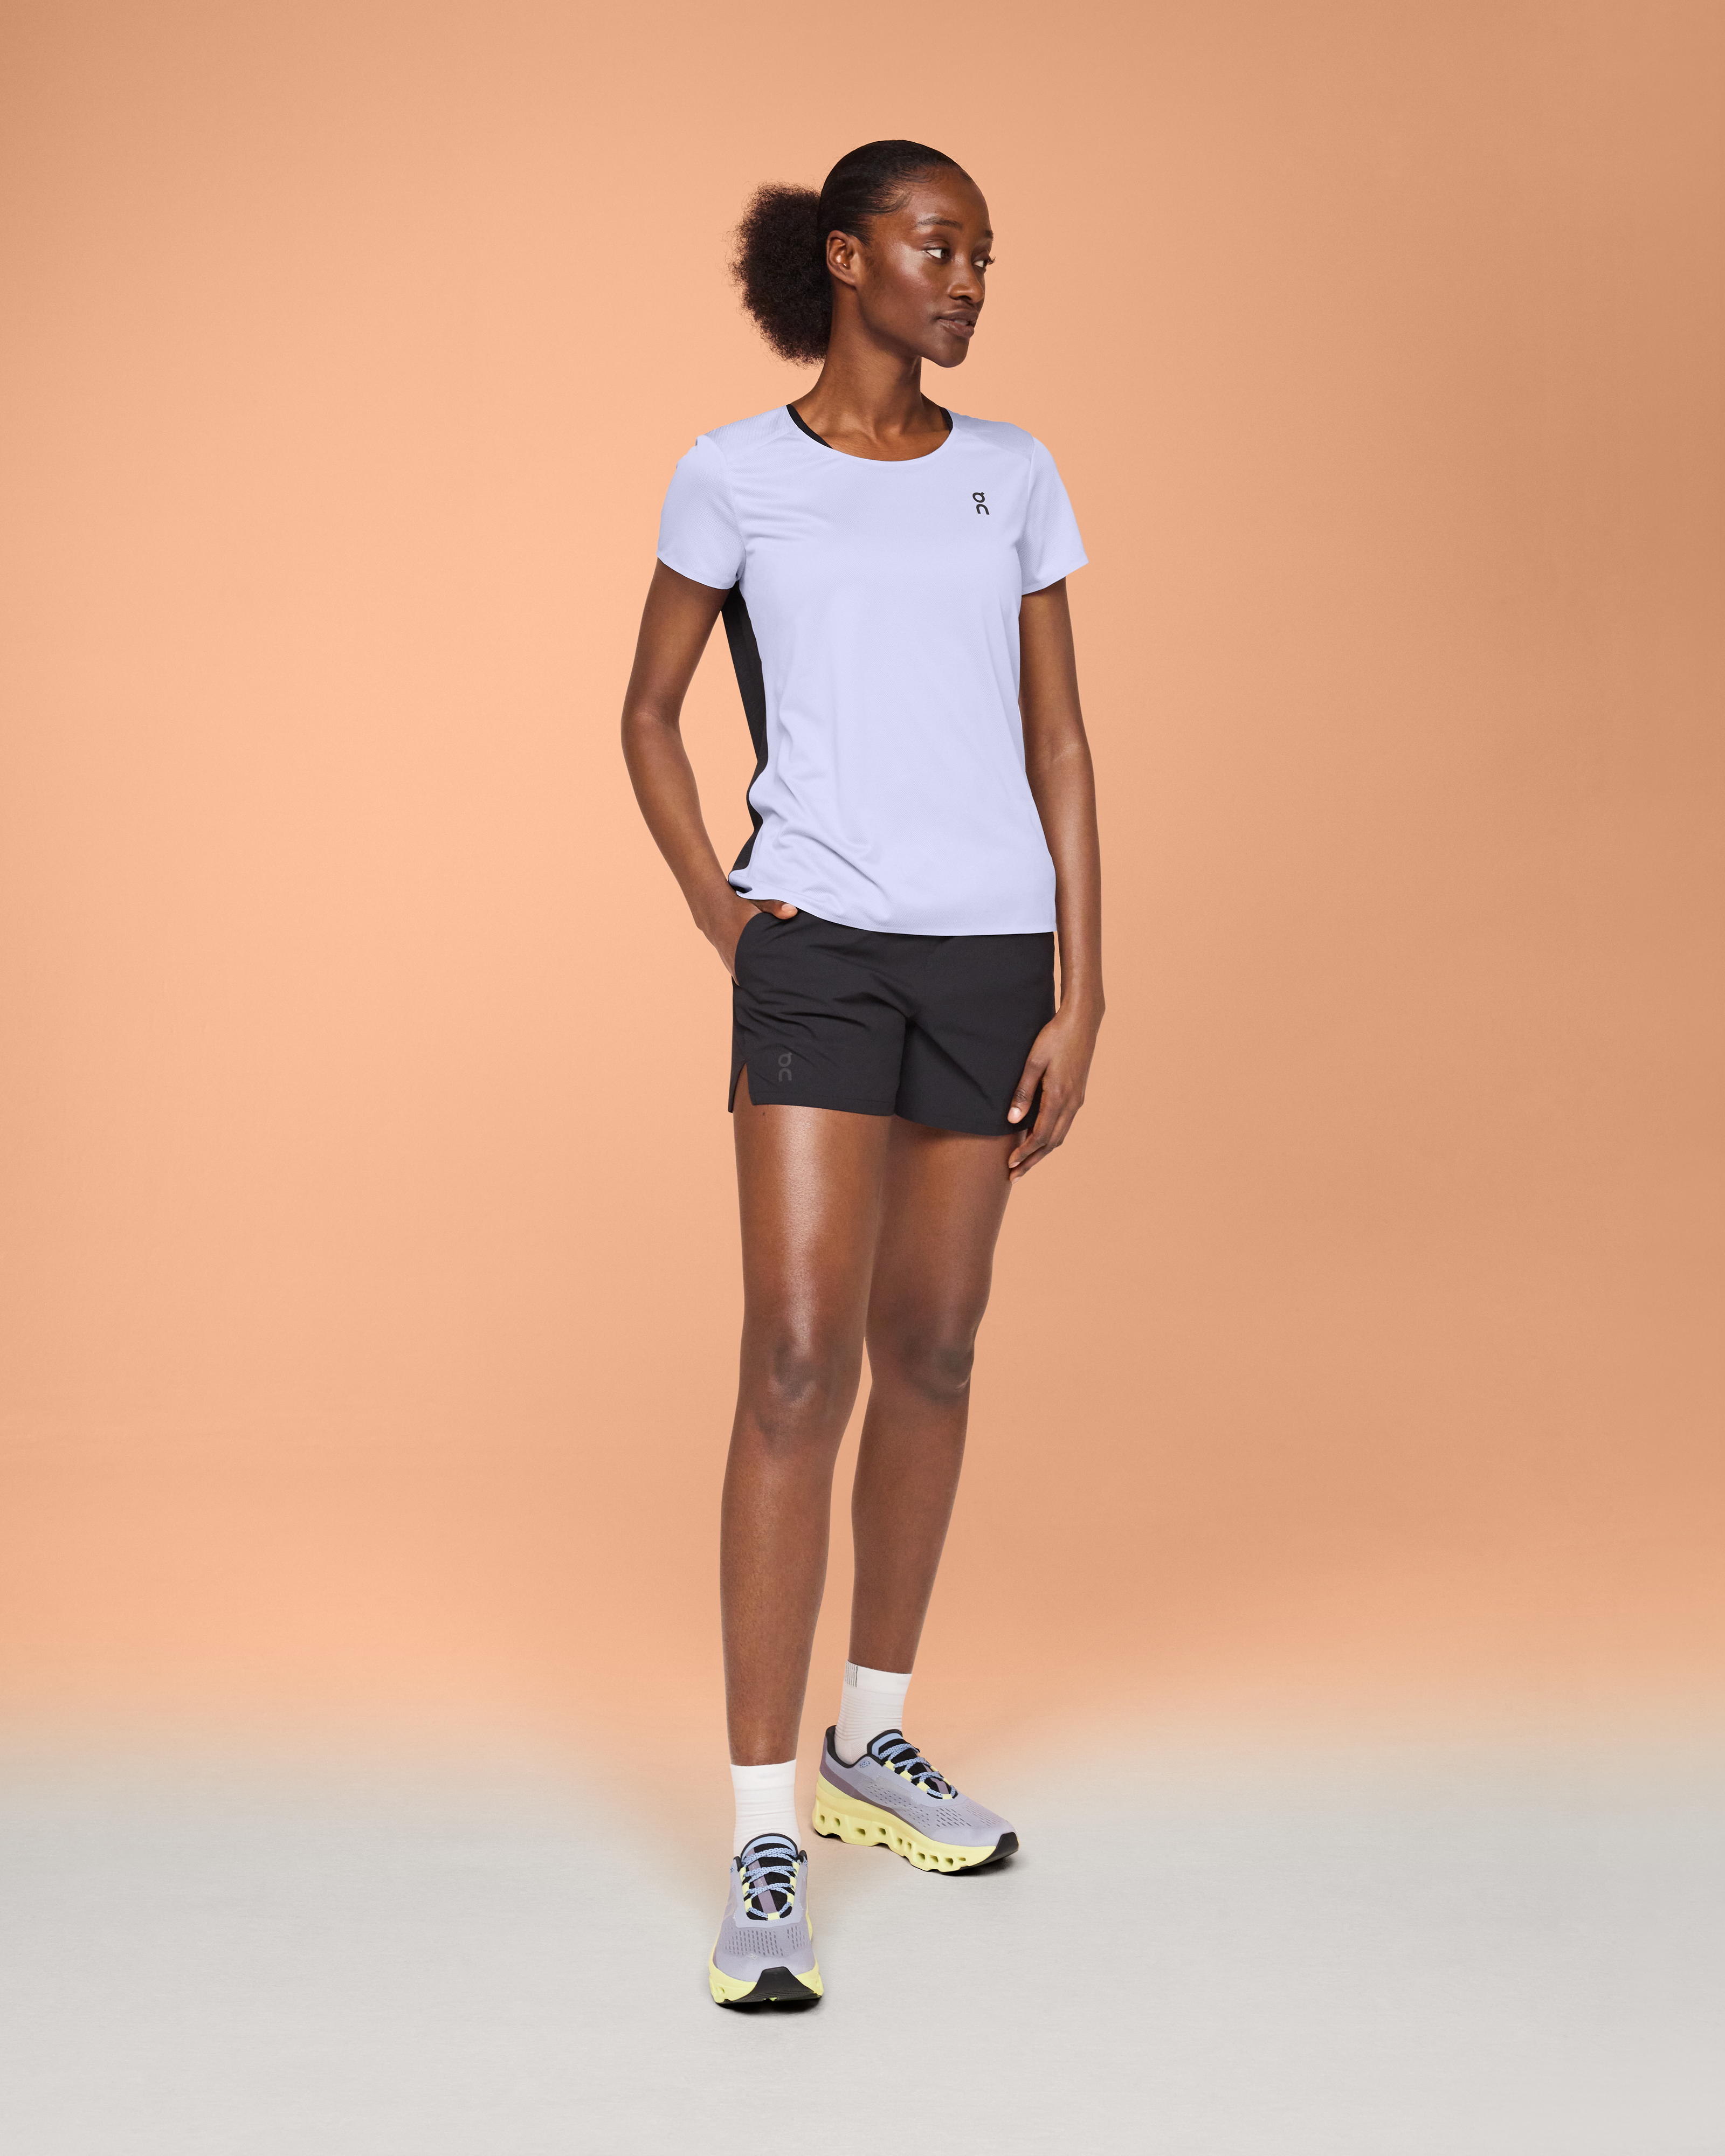 Tuff Athletics Women's Keyhole Active Tee T-Shirt, Small, Lavender - NEW 